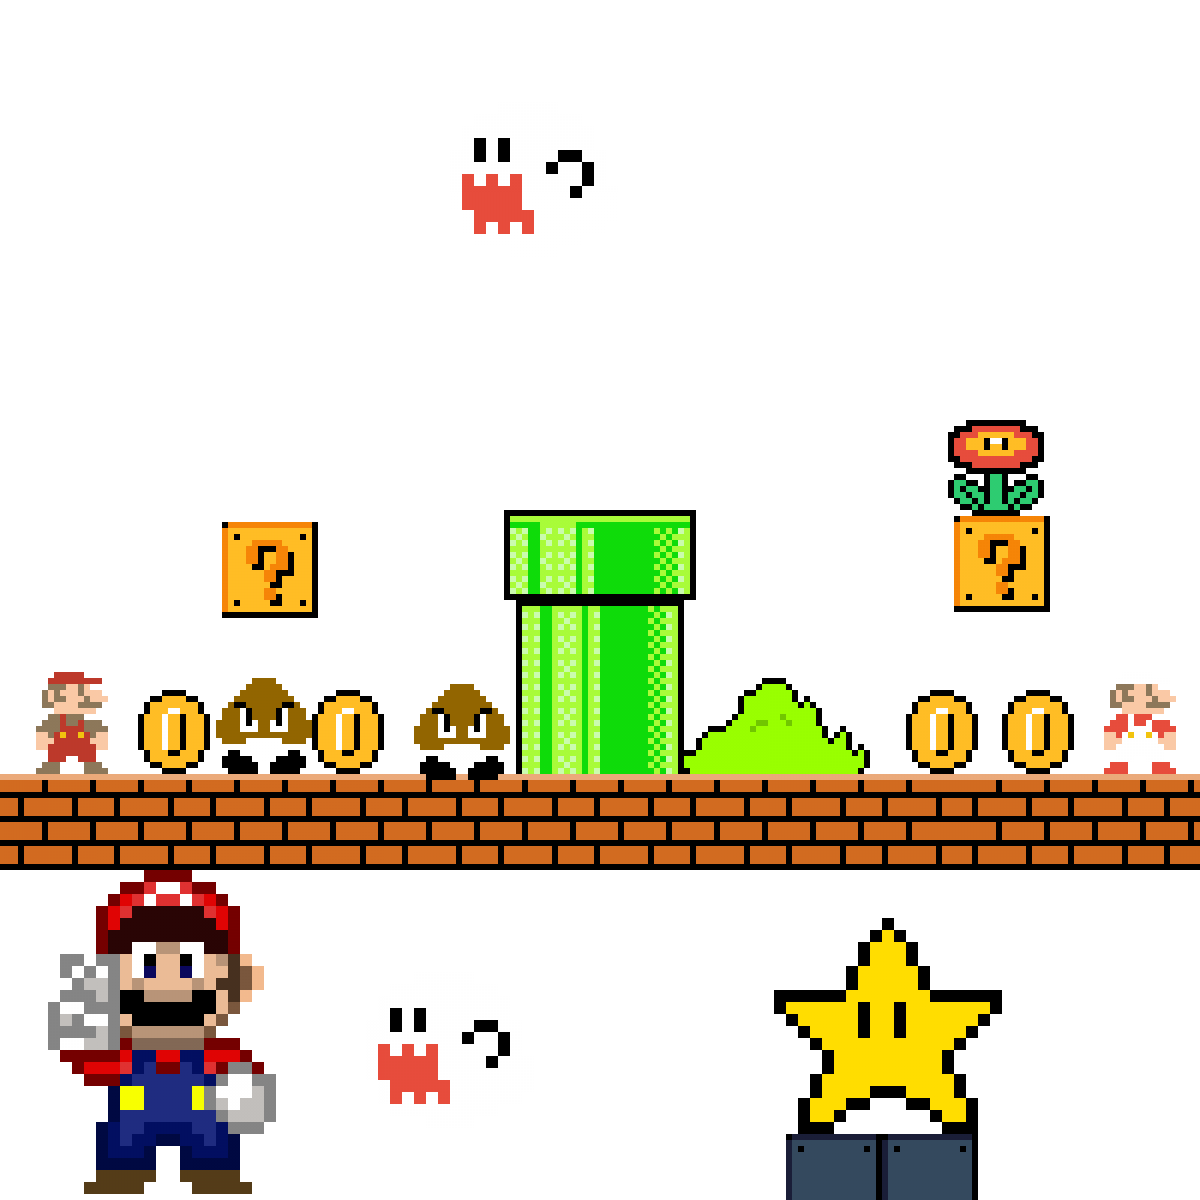 Mario bros sprites. Марио 2д спрайт. Супер Марио БРОС 2д. Спрайты для Марио 2d. Супер Марио БРОС 3 спрайты.